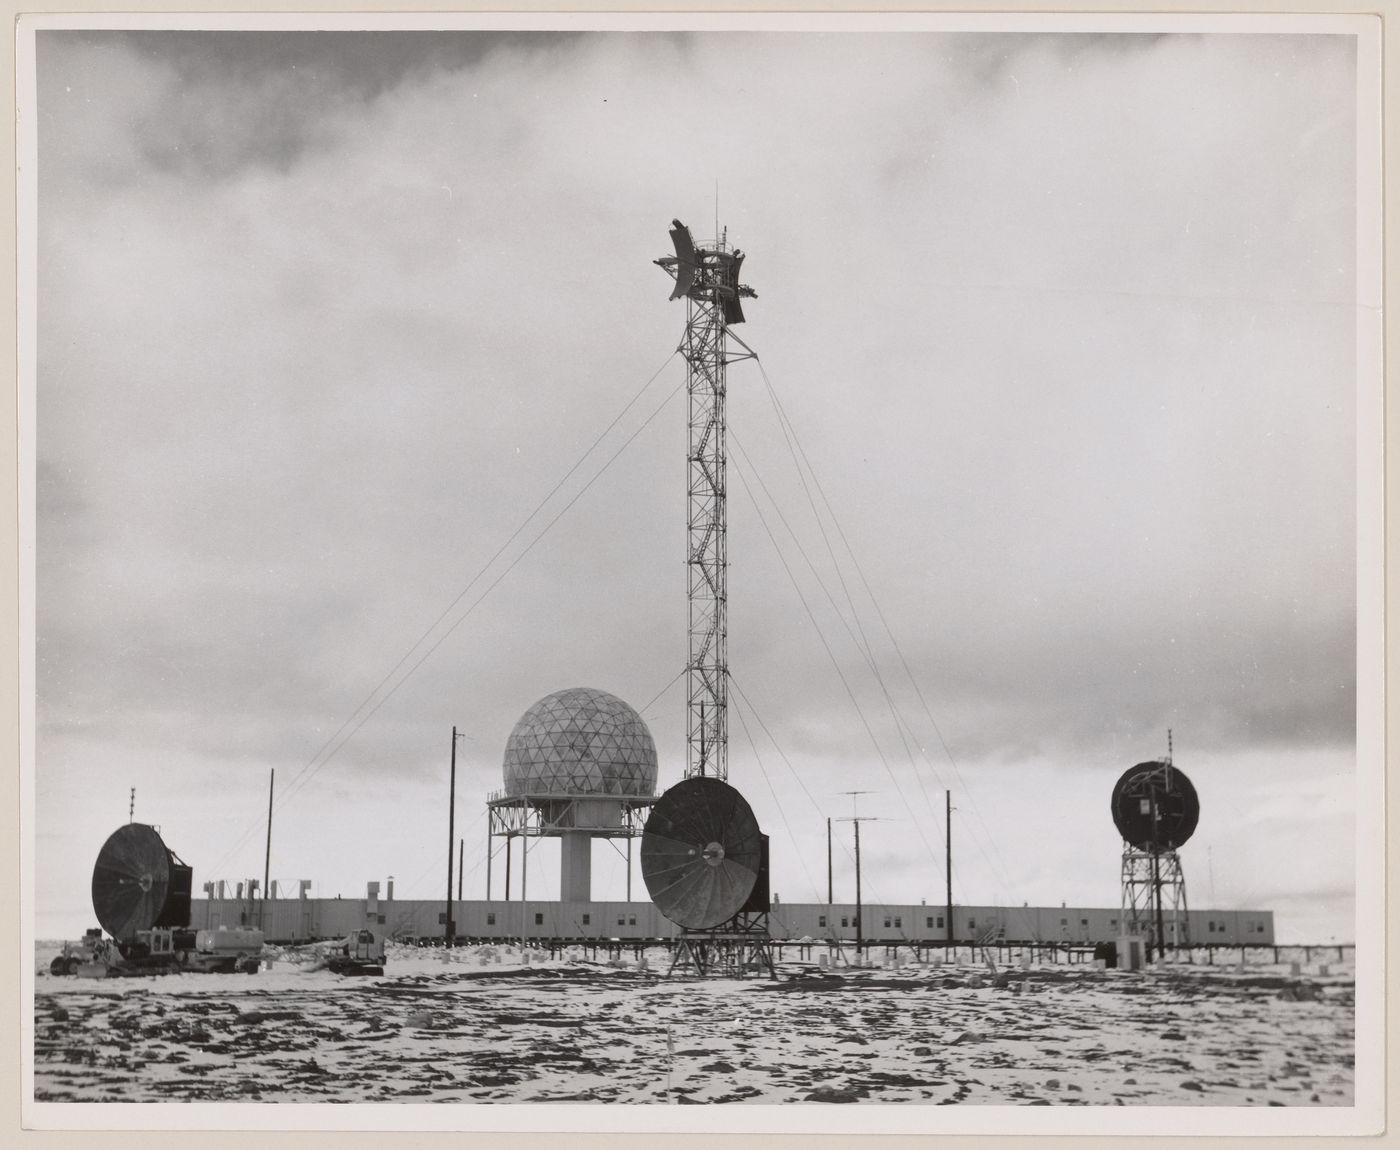 View of DEW Line radar station BAR-3, Tuktoyaktuk, Northwest Territories, Canada